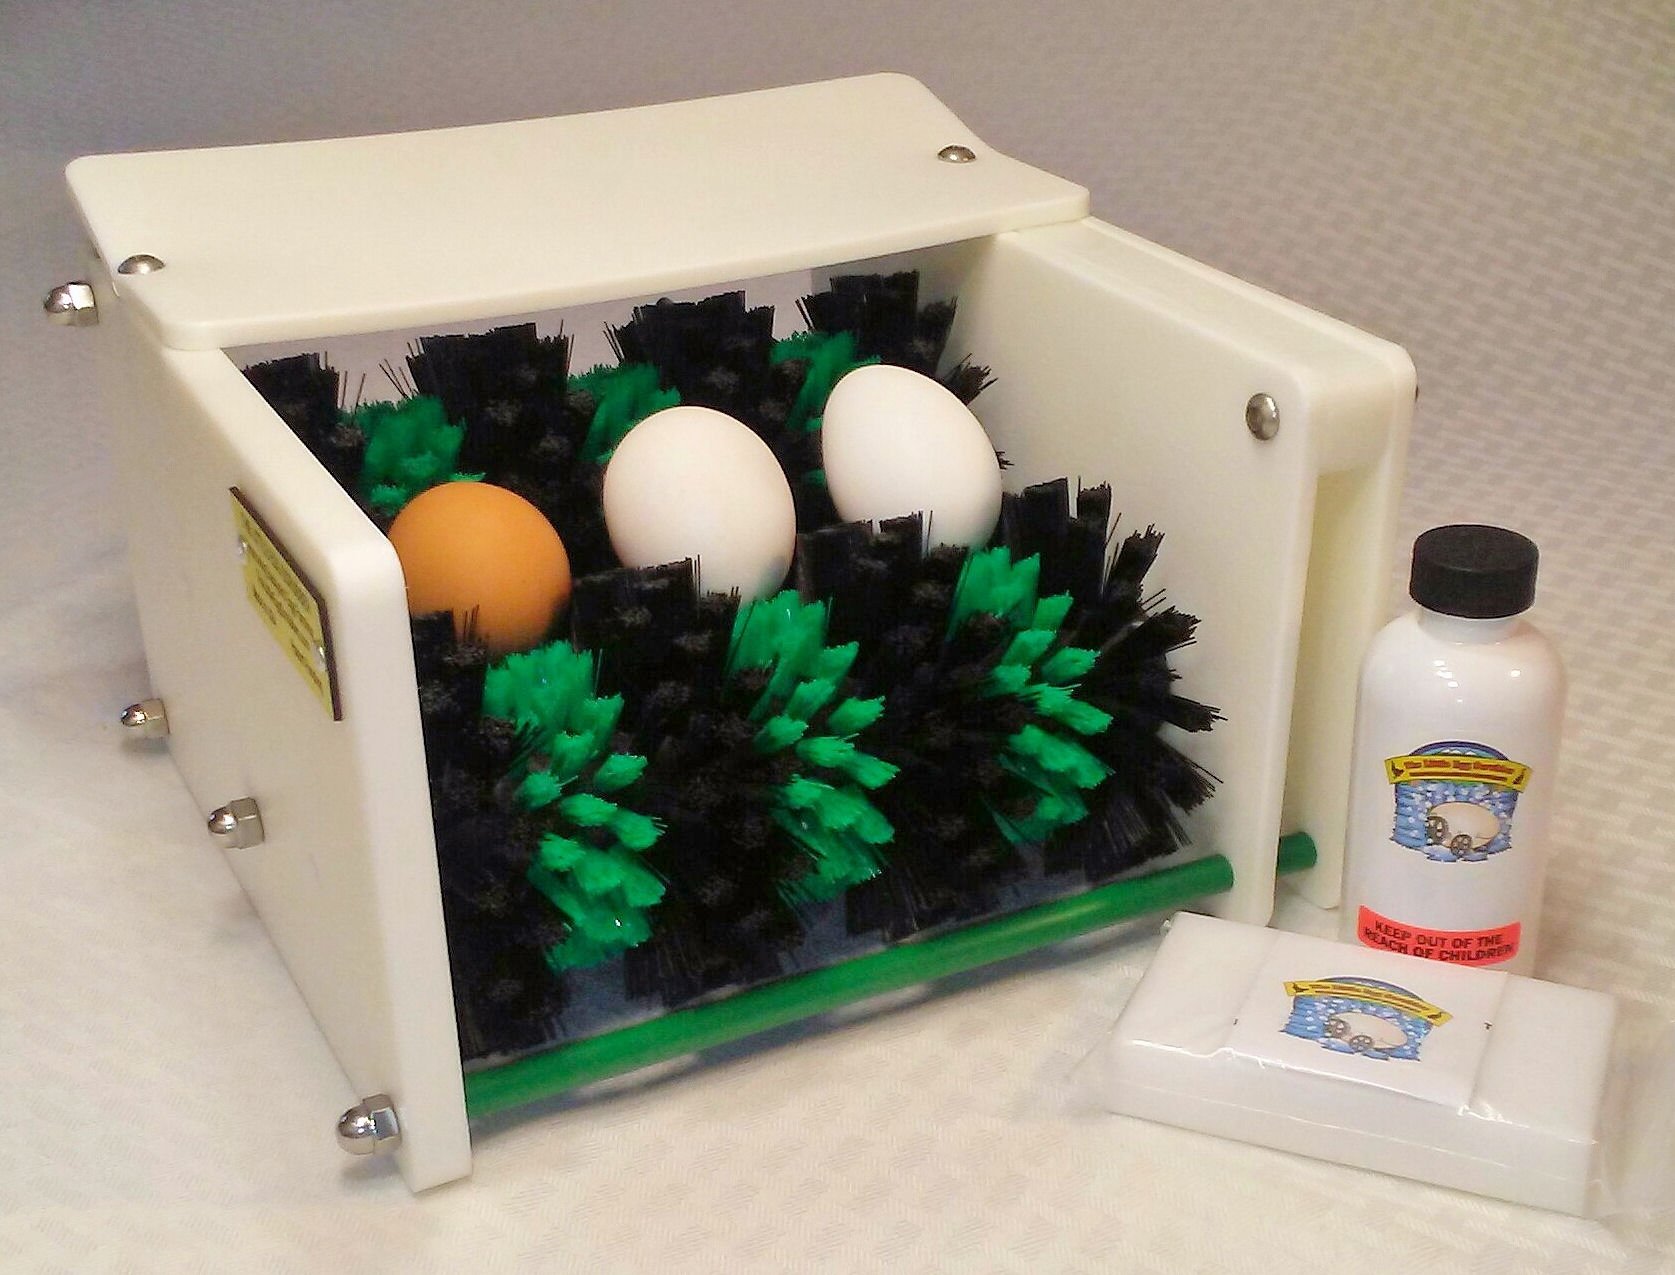 Power Scrub Egg Washer: Egg Washing Machine & Cleaner